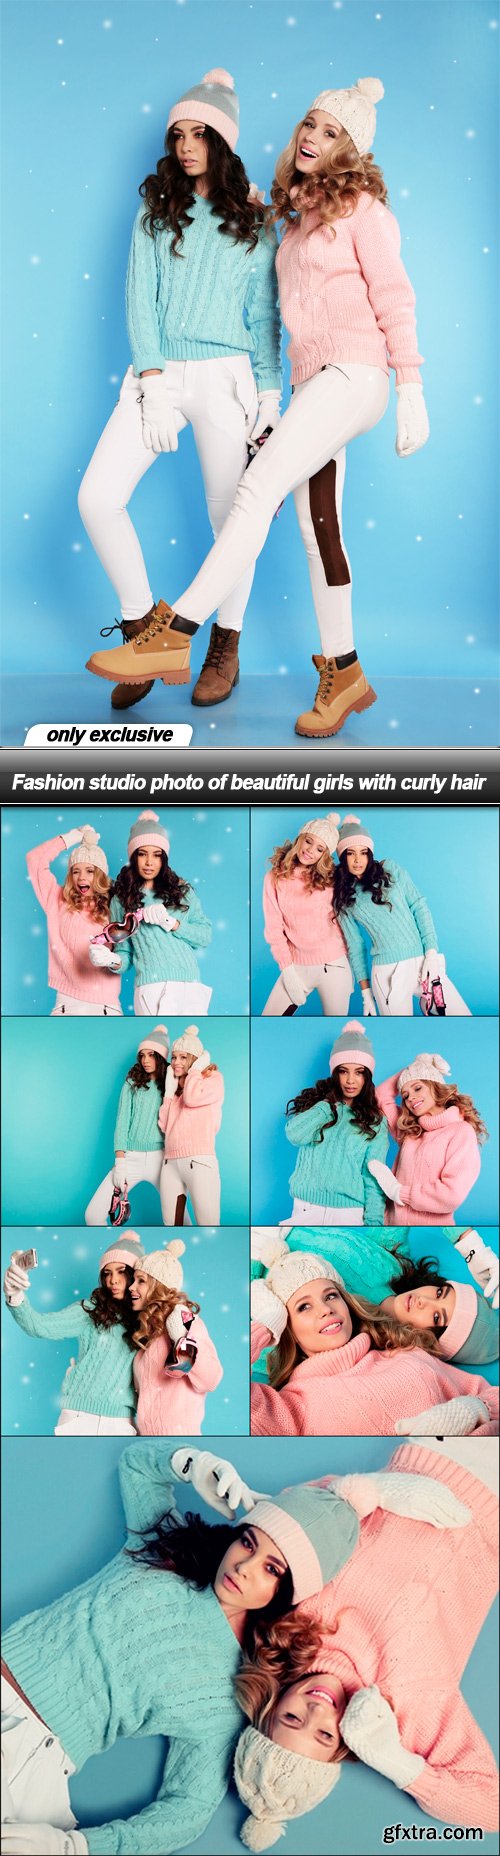 Fashion studio photo of beautiful girls with curly hair - 8 UHQ JPEG